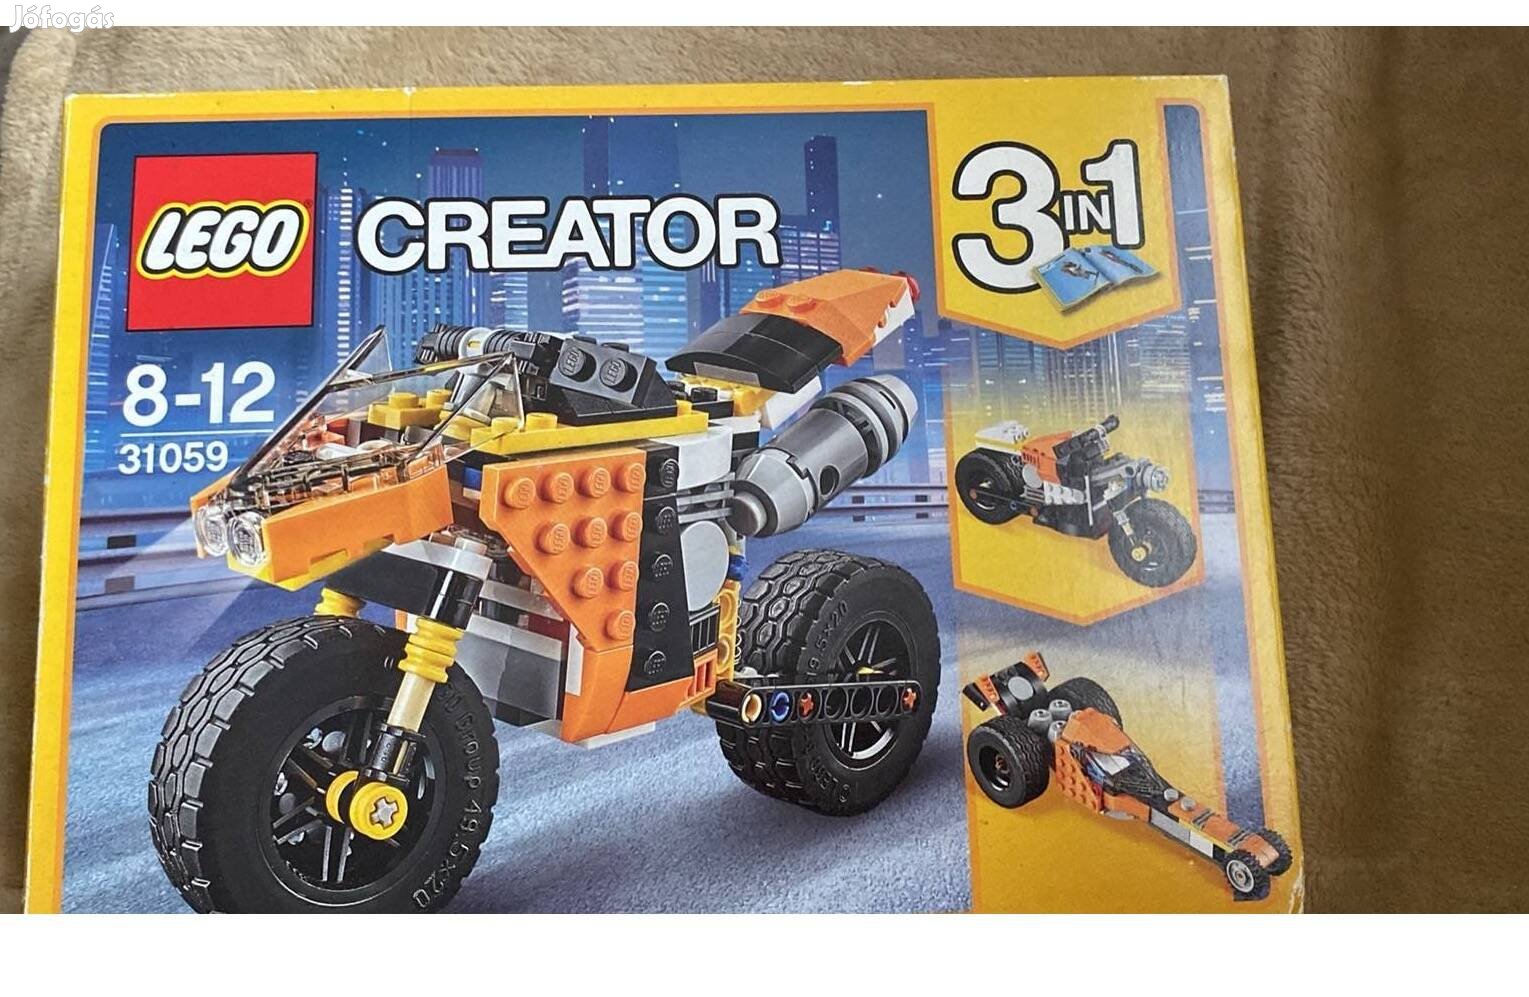 Eladó Lego Creator 3 in 1 31059!!!!!